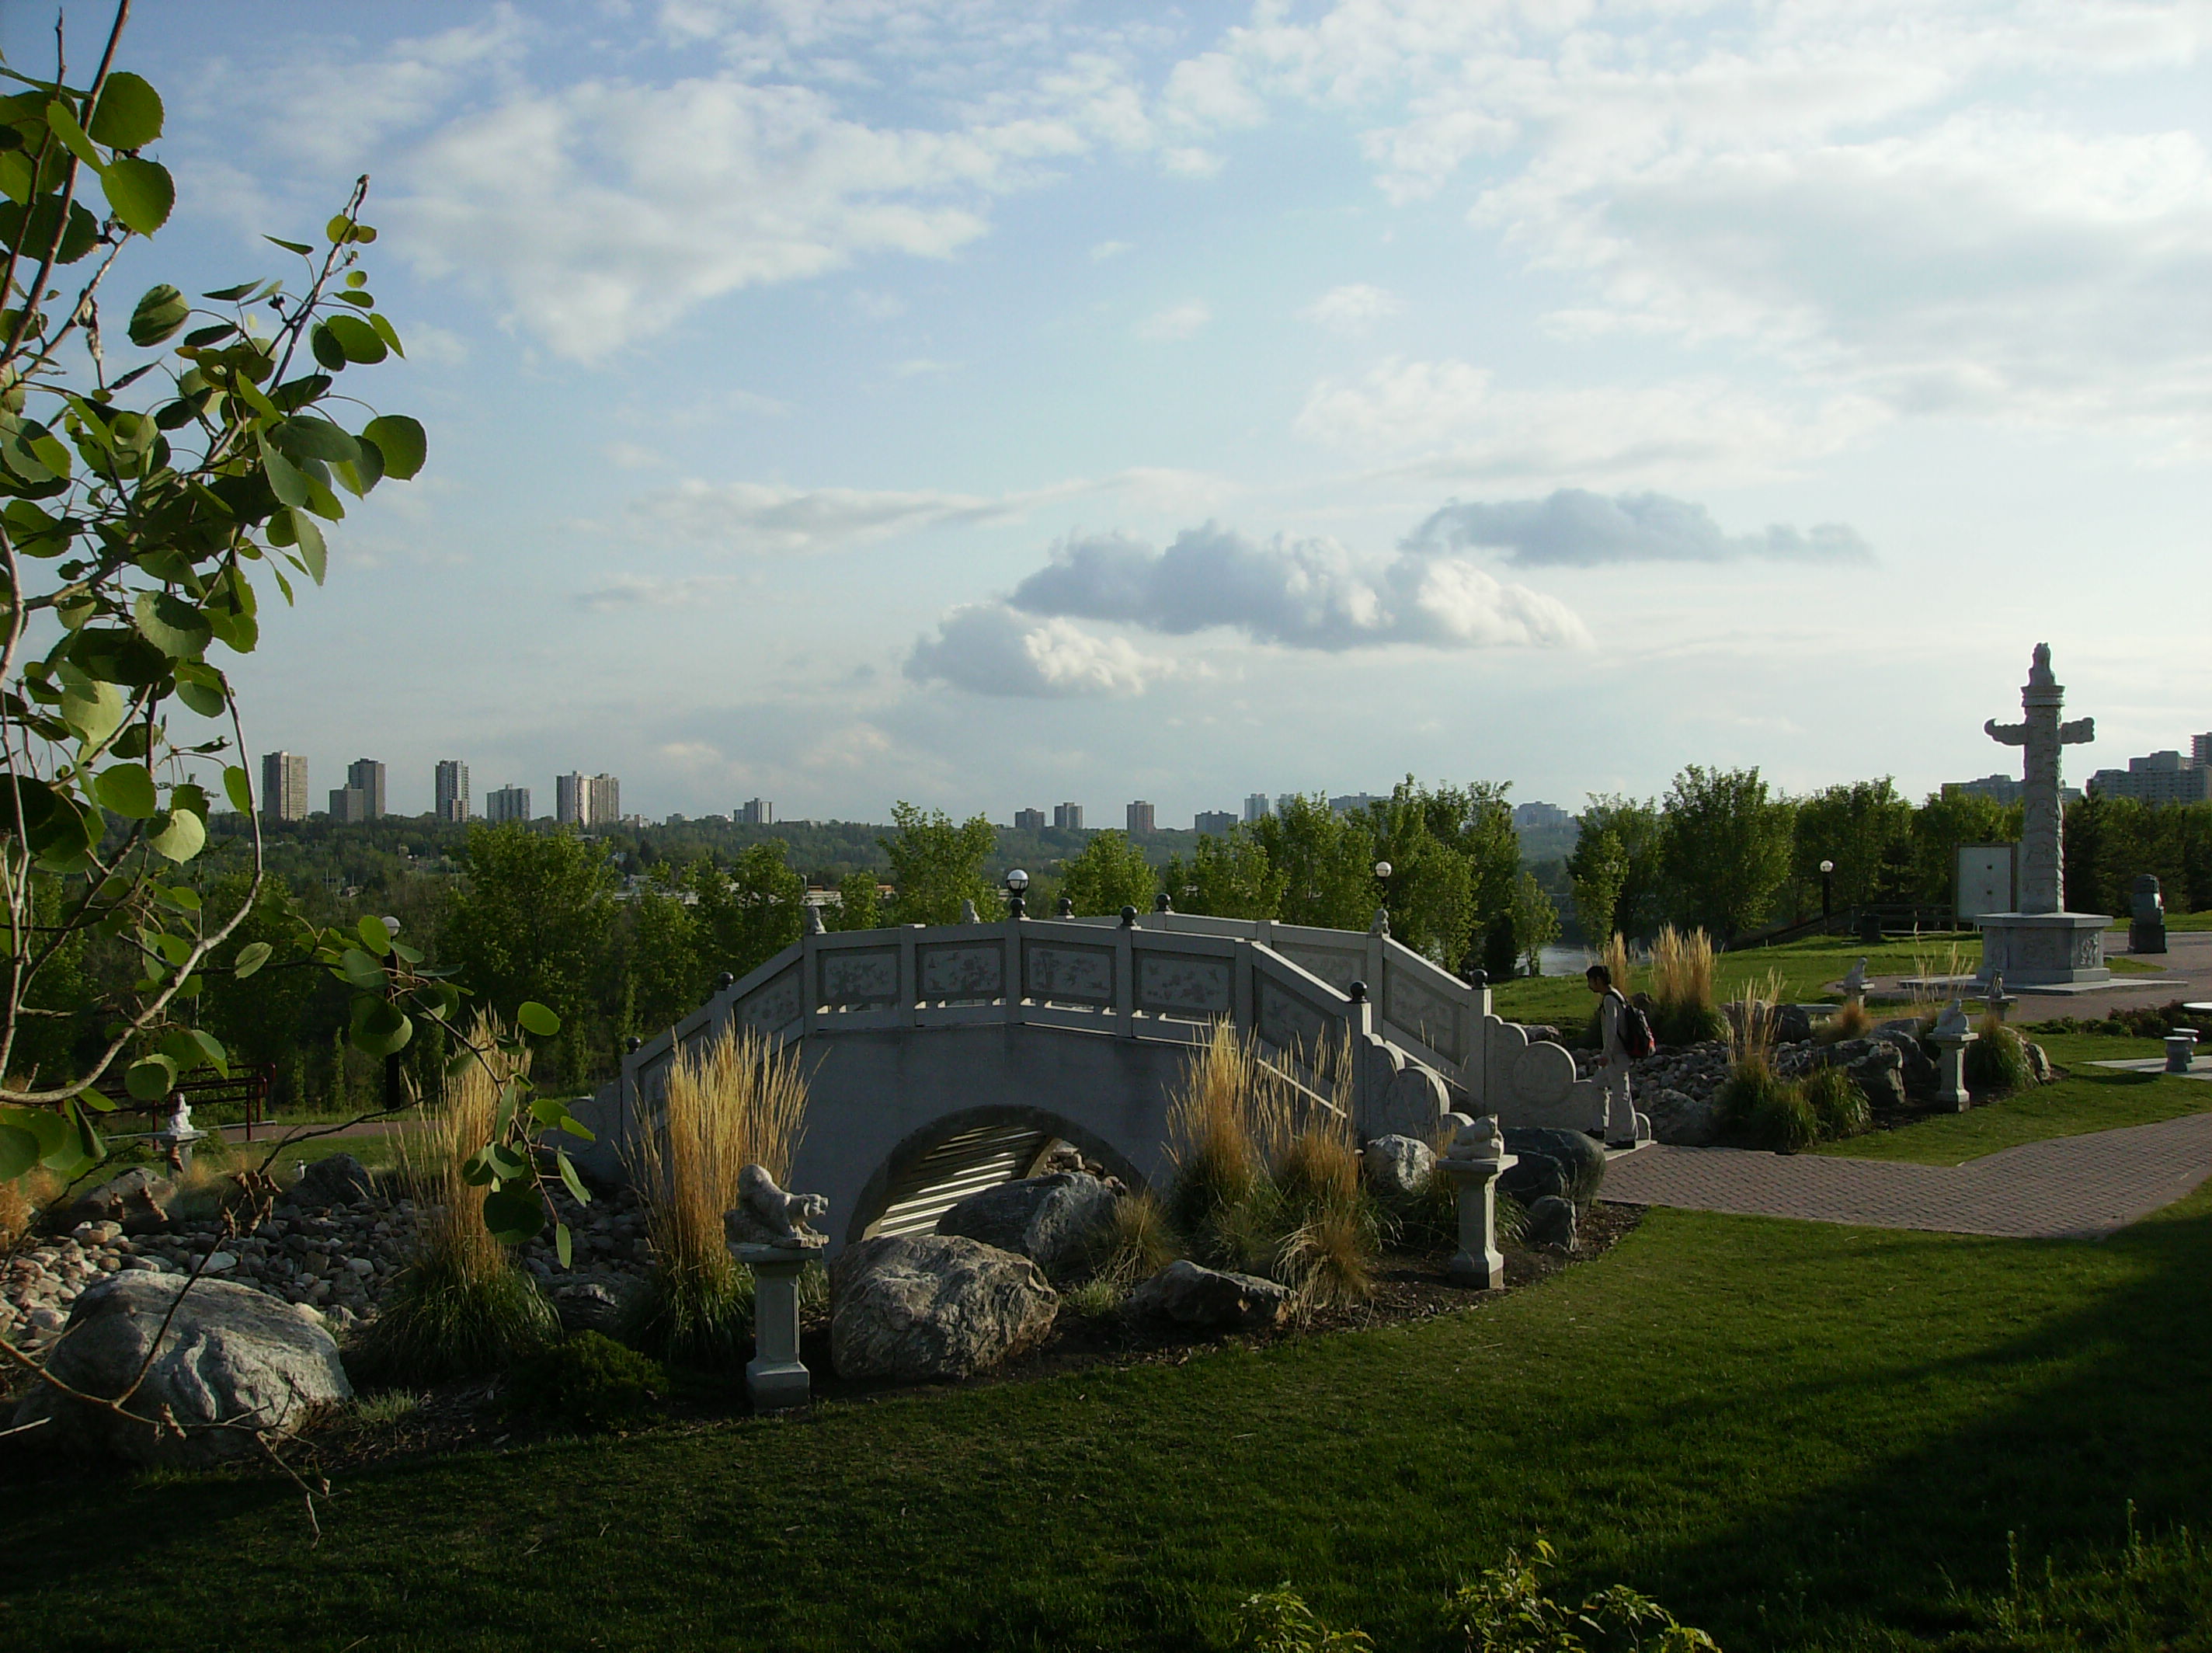 Edmonton Gardens